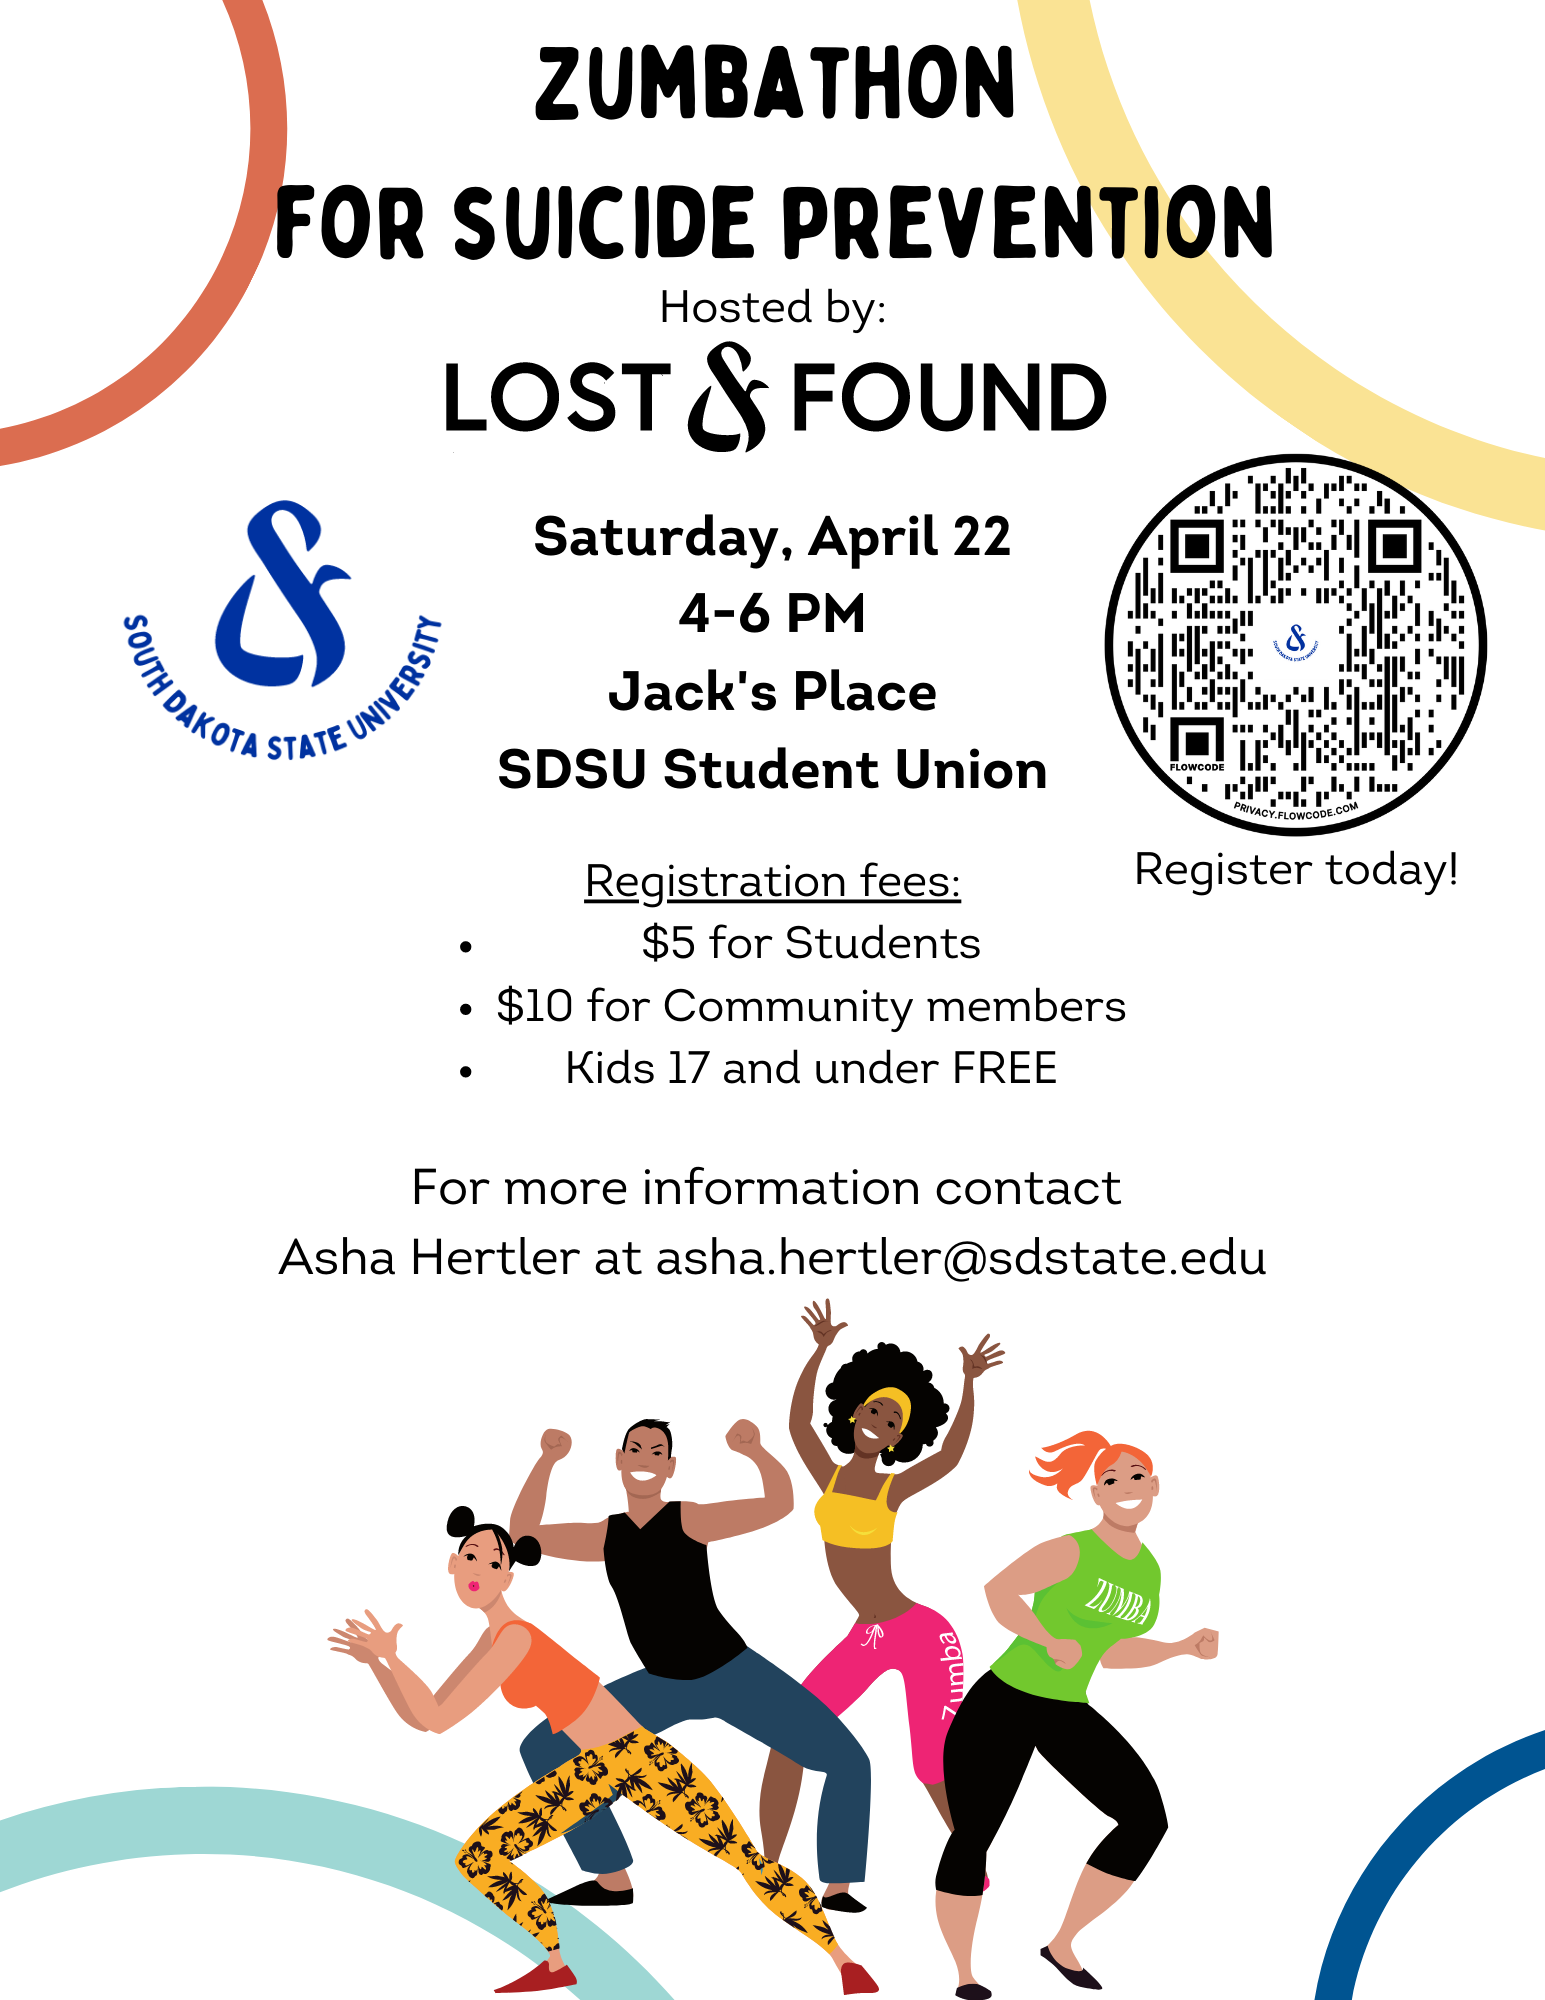 Zumbathon for Suicide Prevention at SDSU flyer